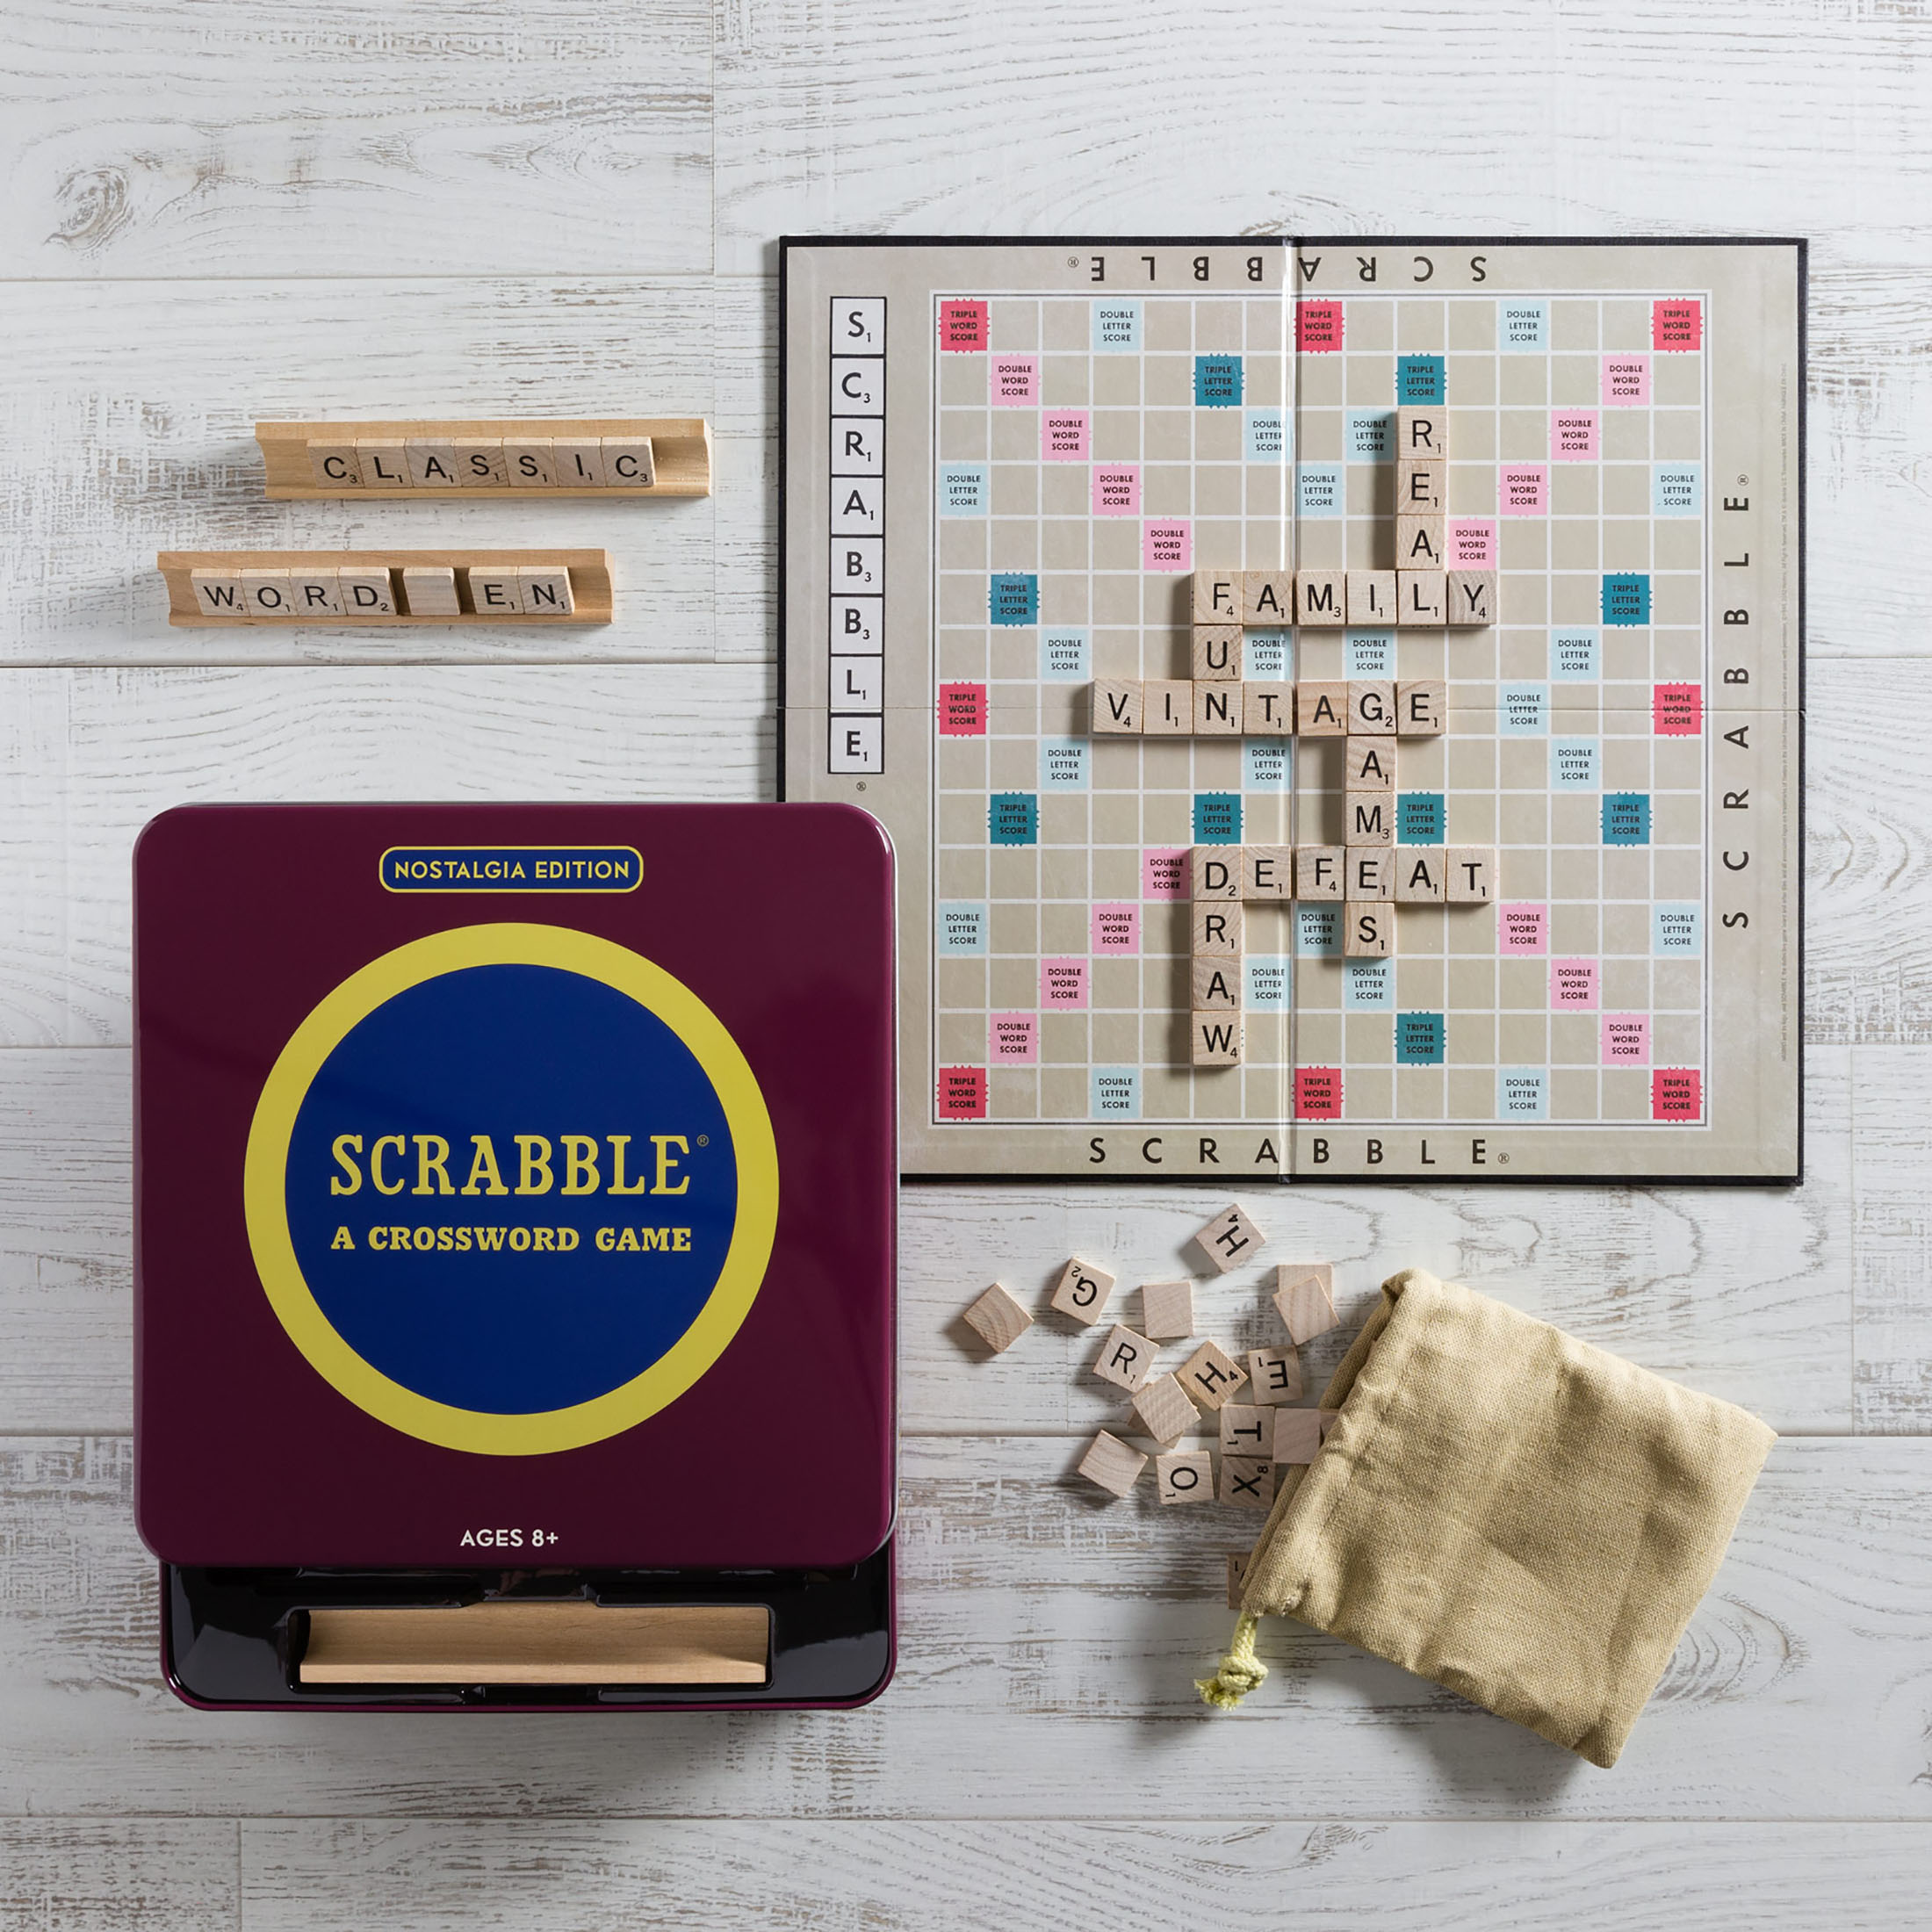 Scrabble Board Game Nostalgia Edition Game Tin - image 3 of 3